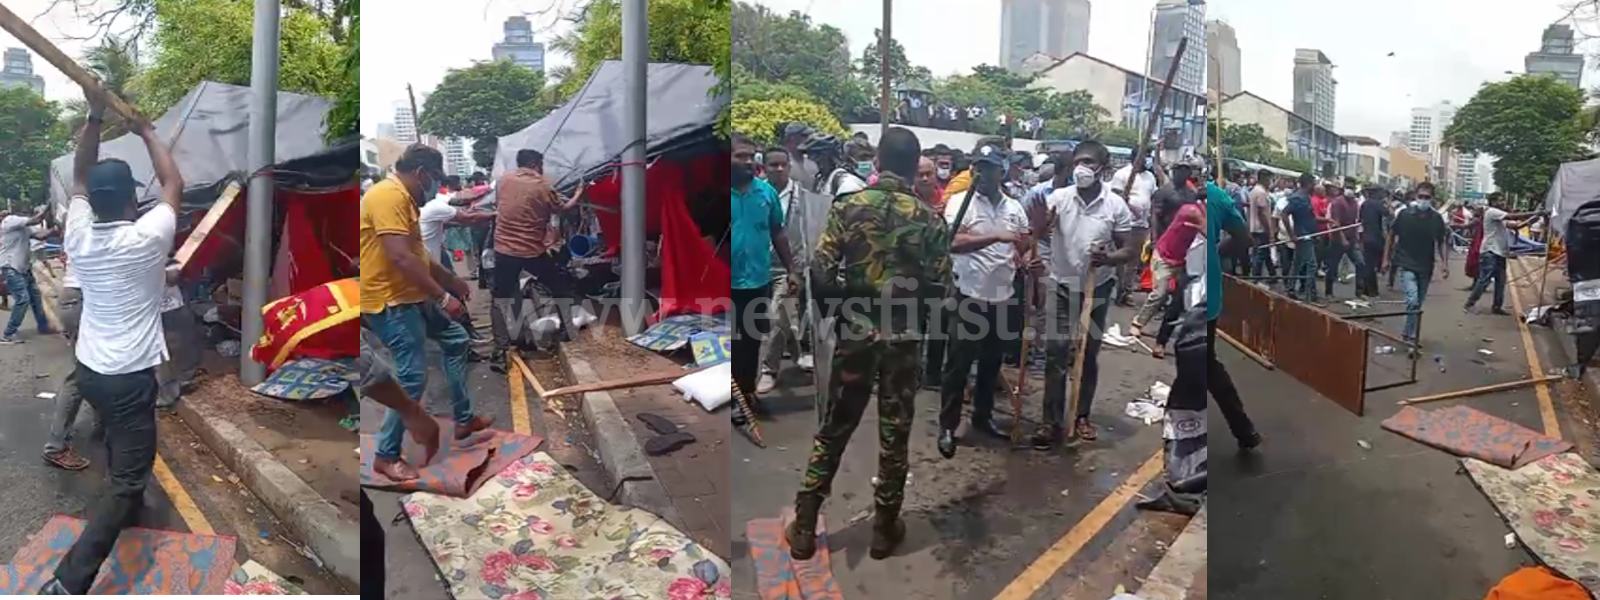 Sri Lanka : 130 people hospitalized following violence in Colombo